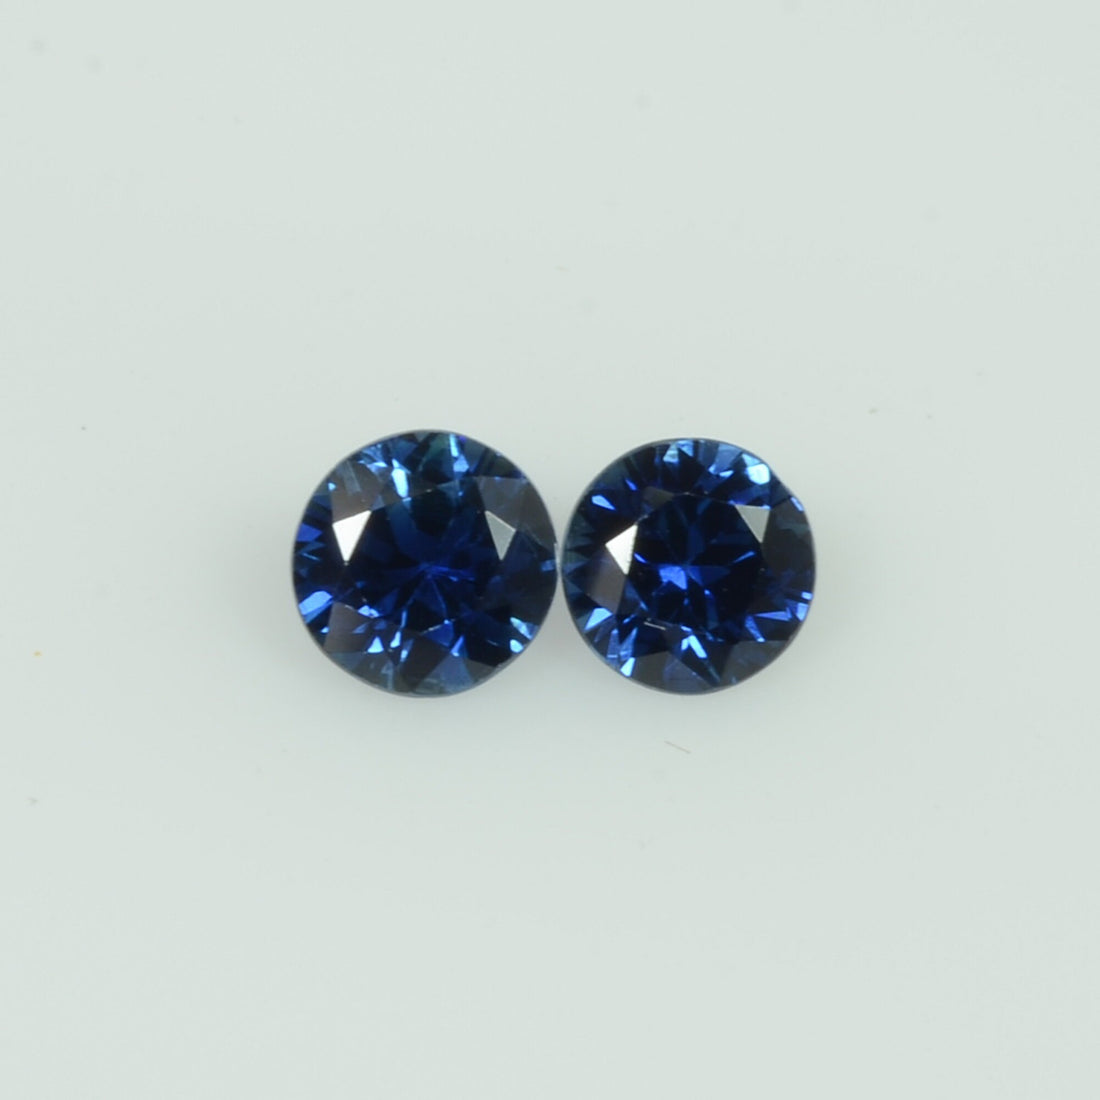 4-4.5 mm Natural Blue Sapphire Loose Gemstone Round Diamond Cut